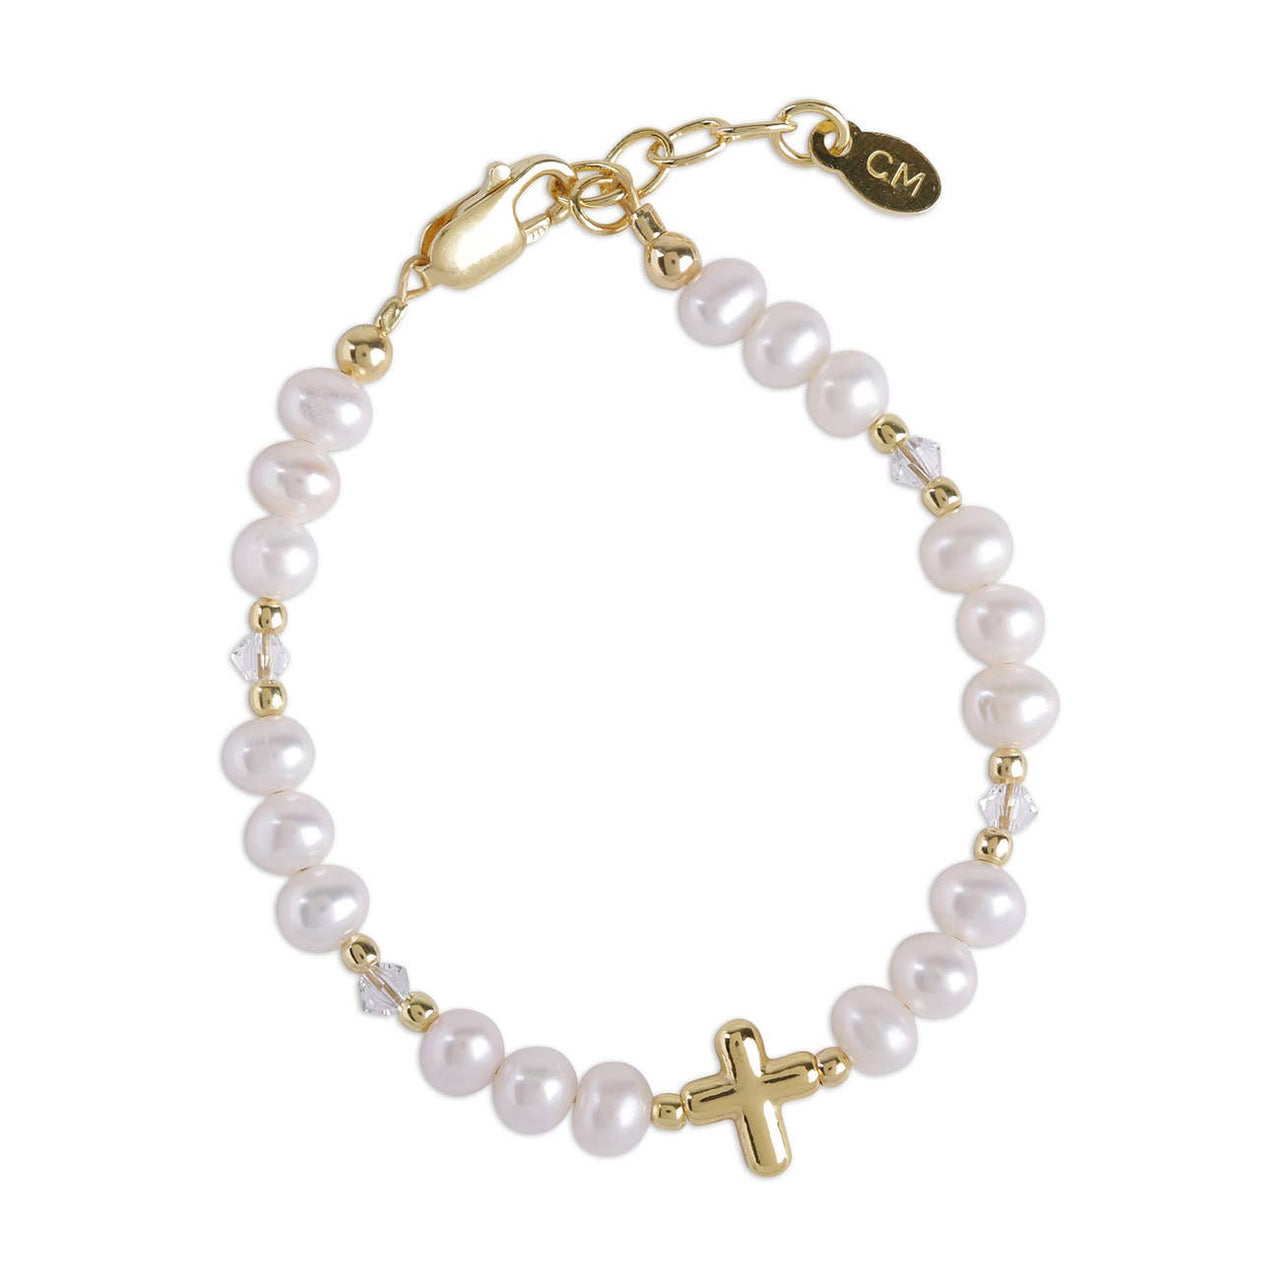 Cherished Moments Eve 14K Gold-Plated Pearl Bracelet w/ Cross